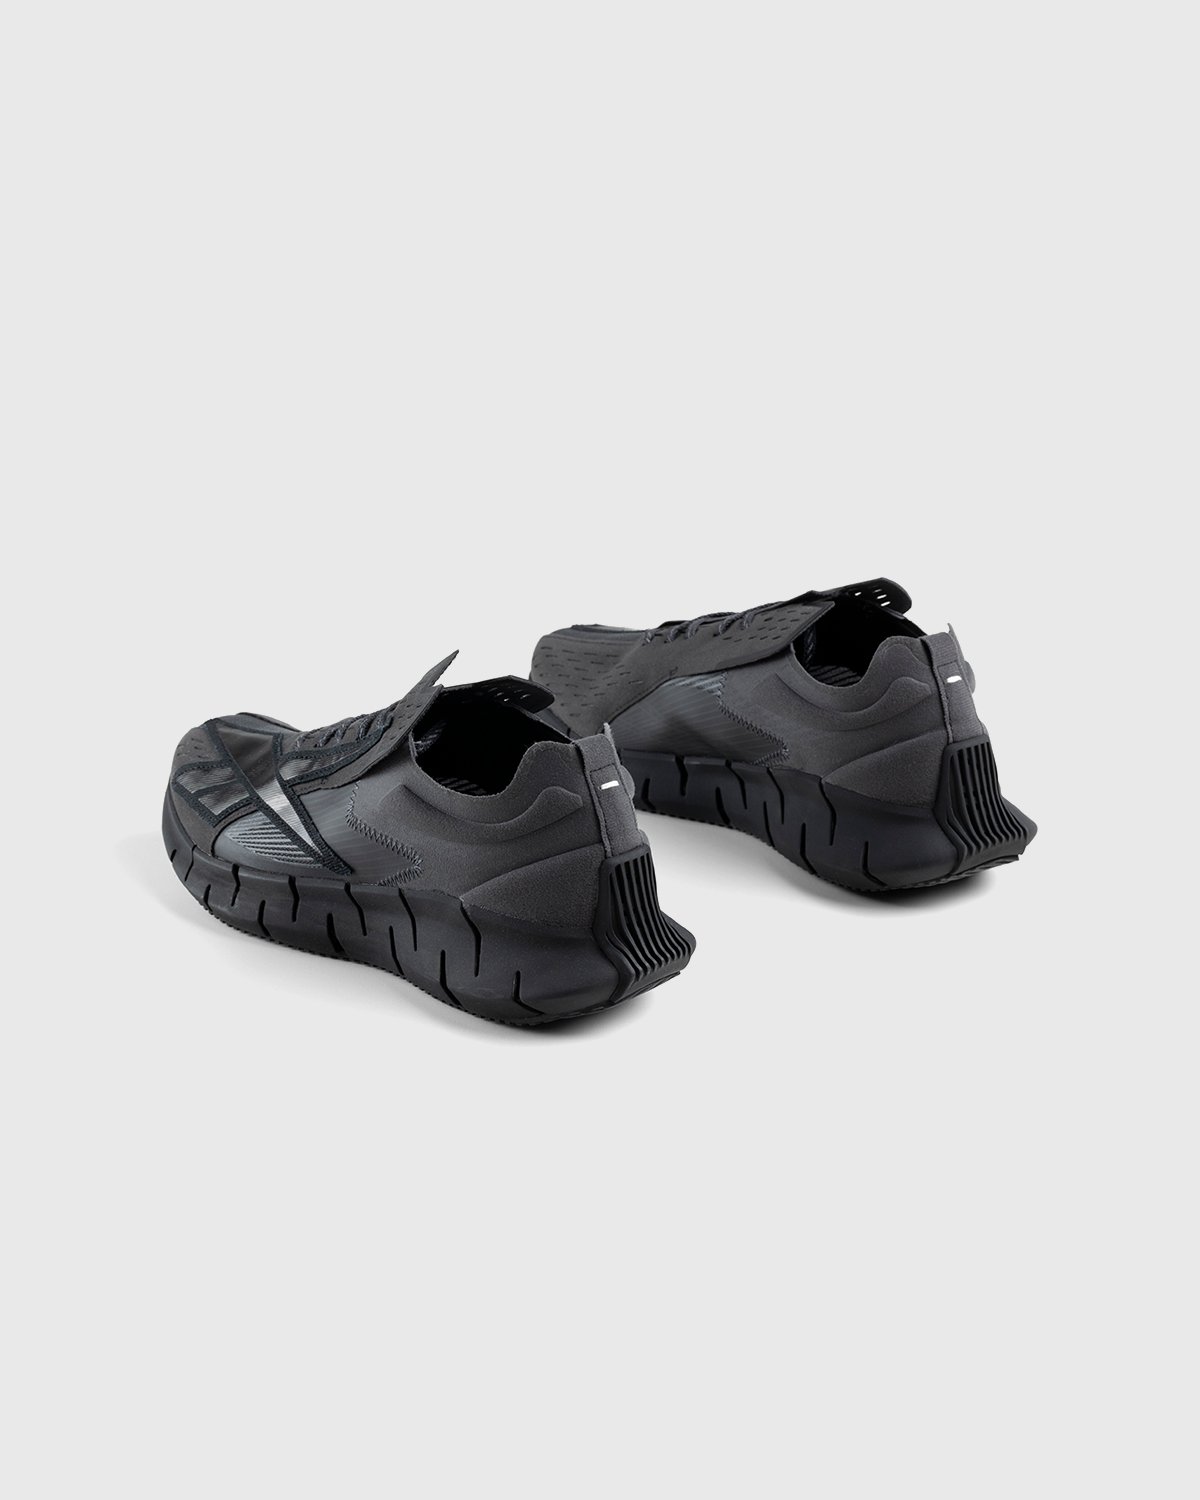 Reebok x Maison Margiela - Zig 3D Storm Memory Of Black - Footwear - Black - Image 3